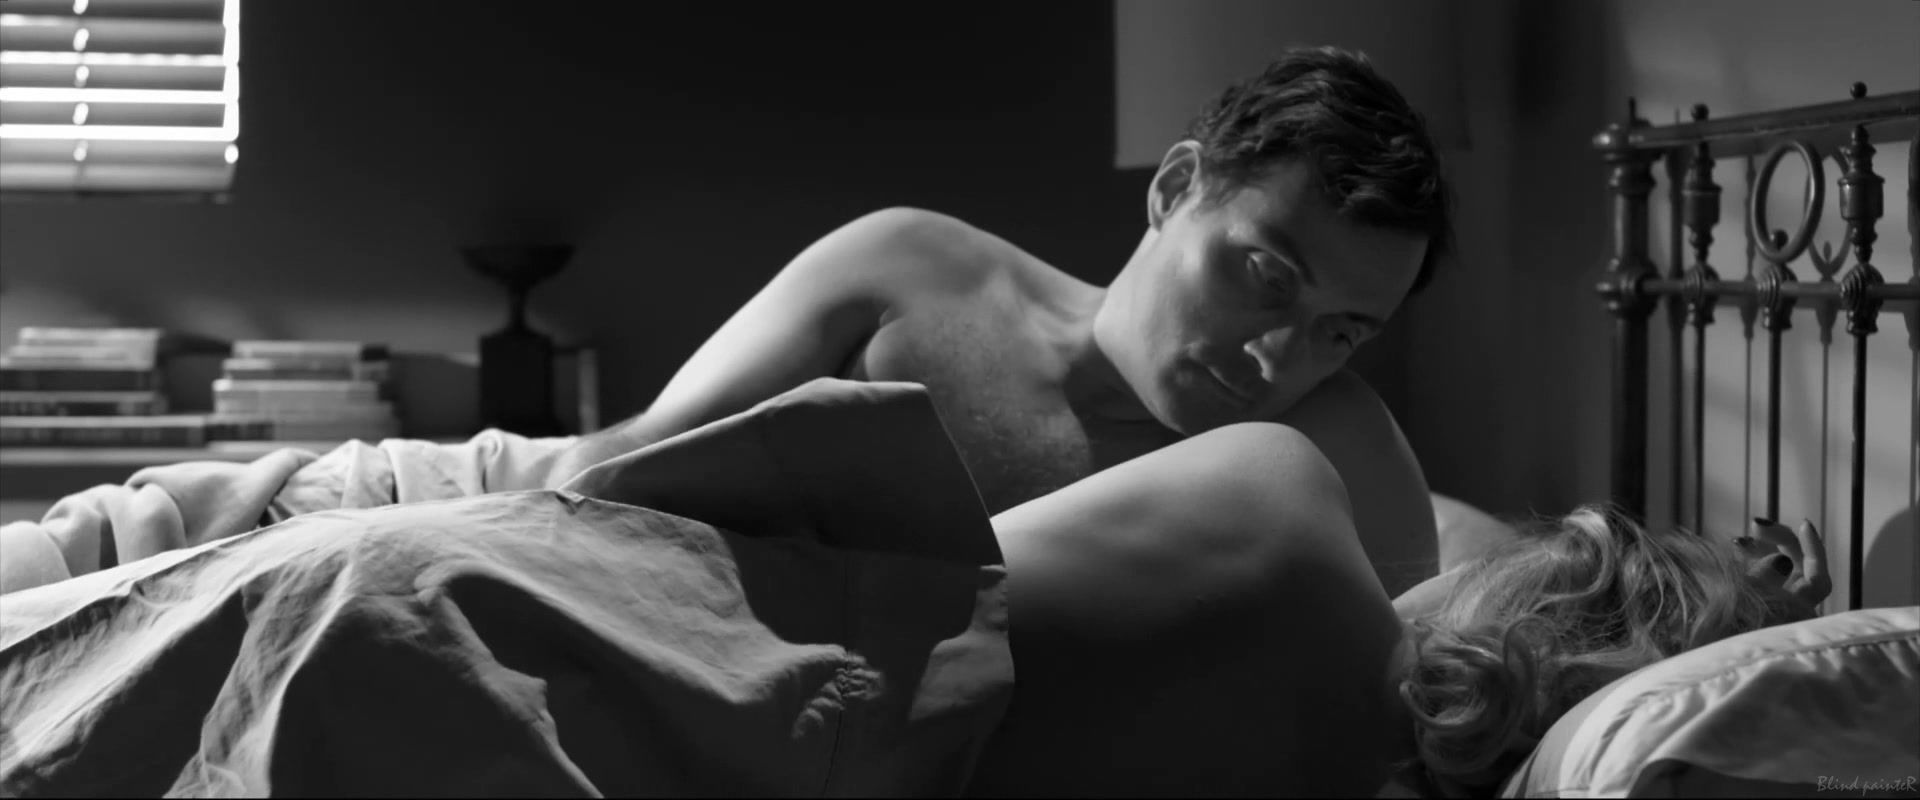 Women Sex video Malin Akerman nude - Hotel Noir (2012) Bunda Grande - 2